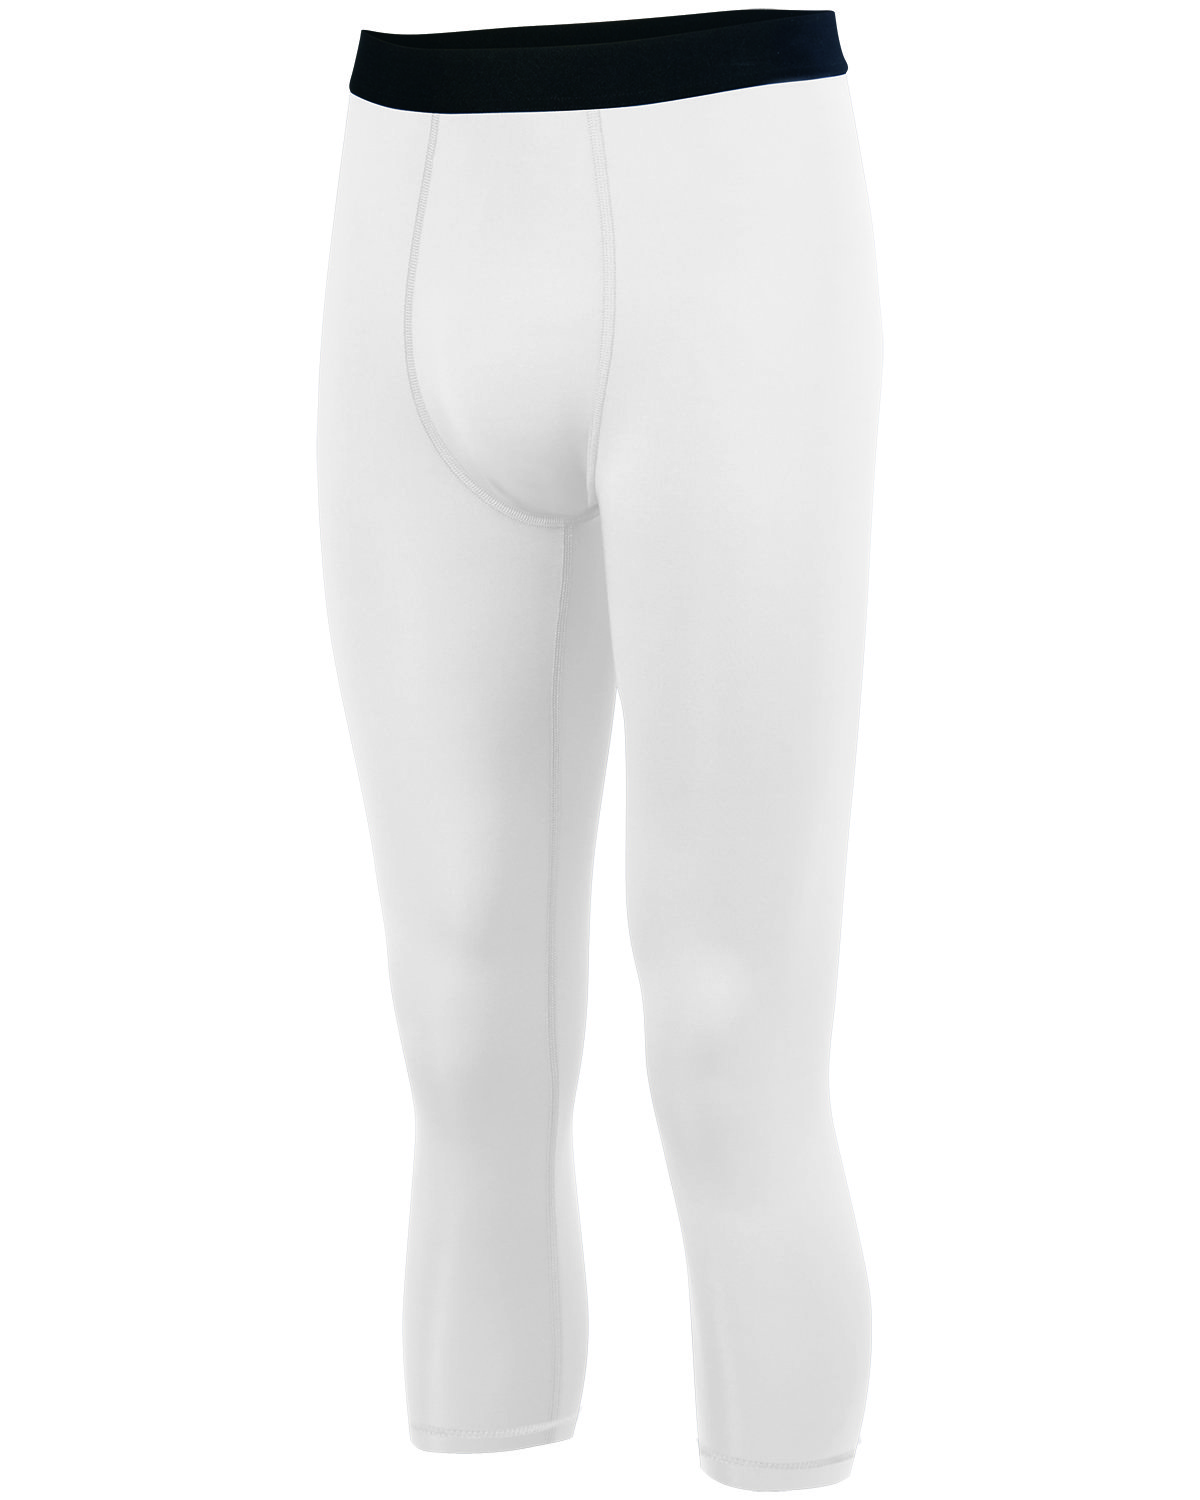 Mens Hyperform Compression Calf Length Tight-Augusta Sportswear